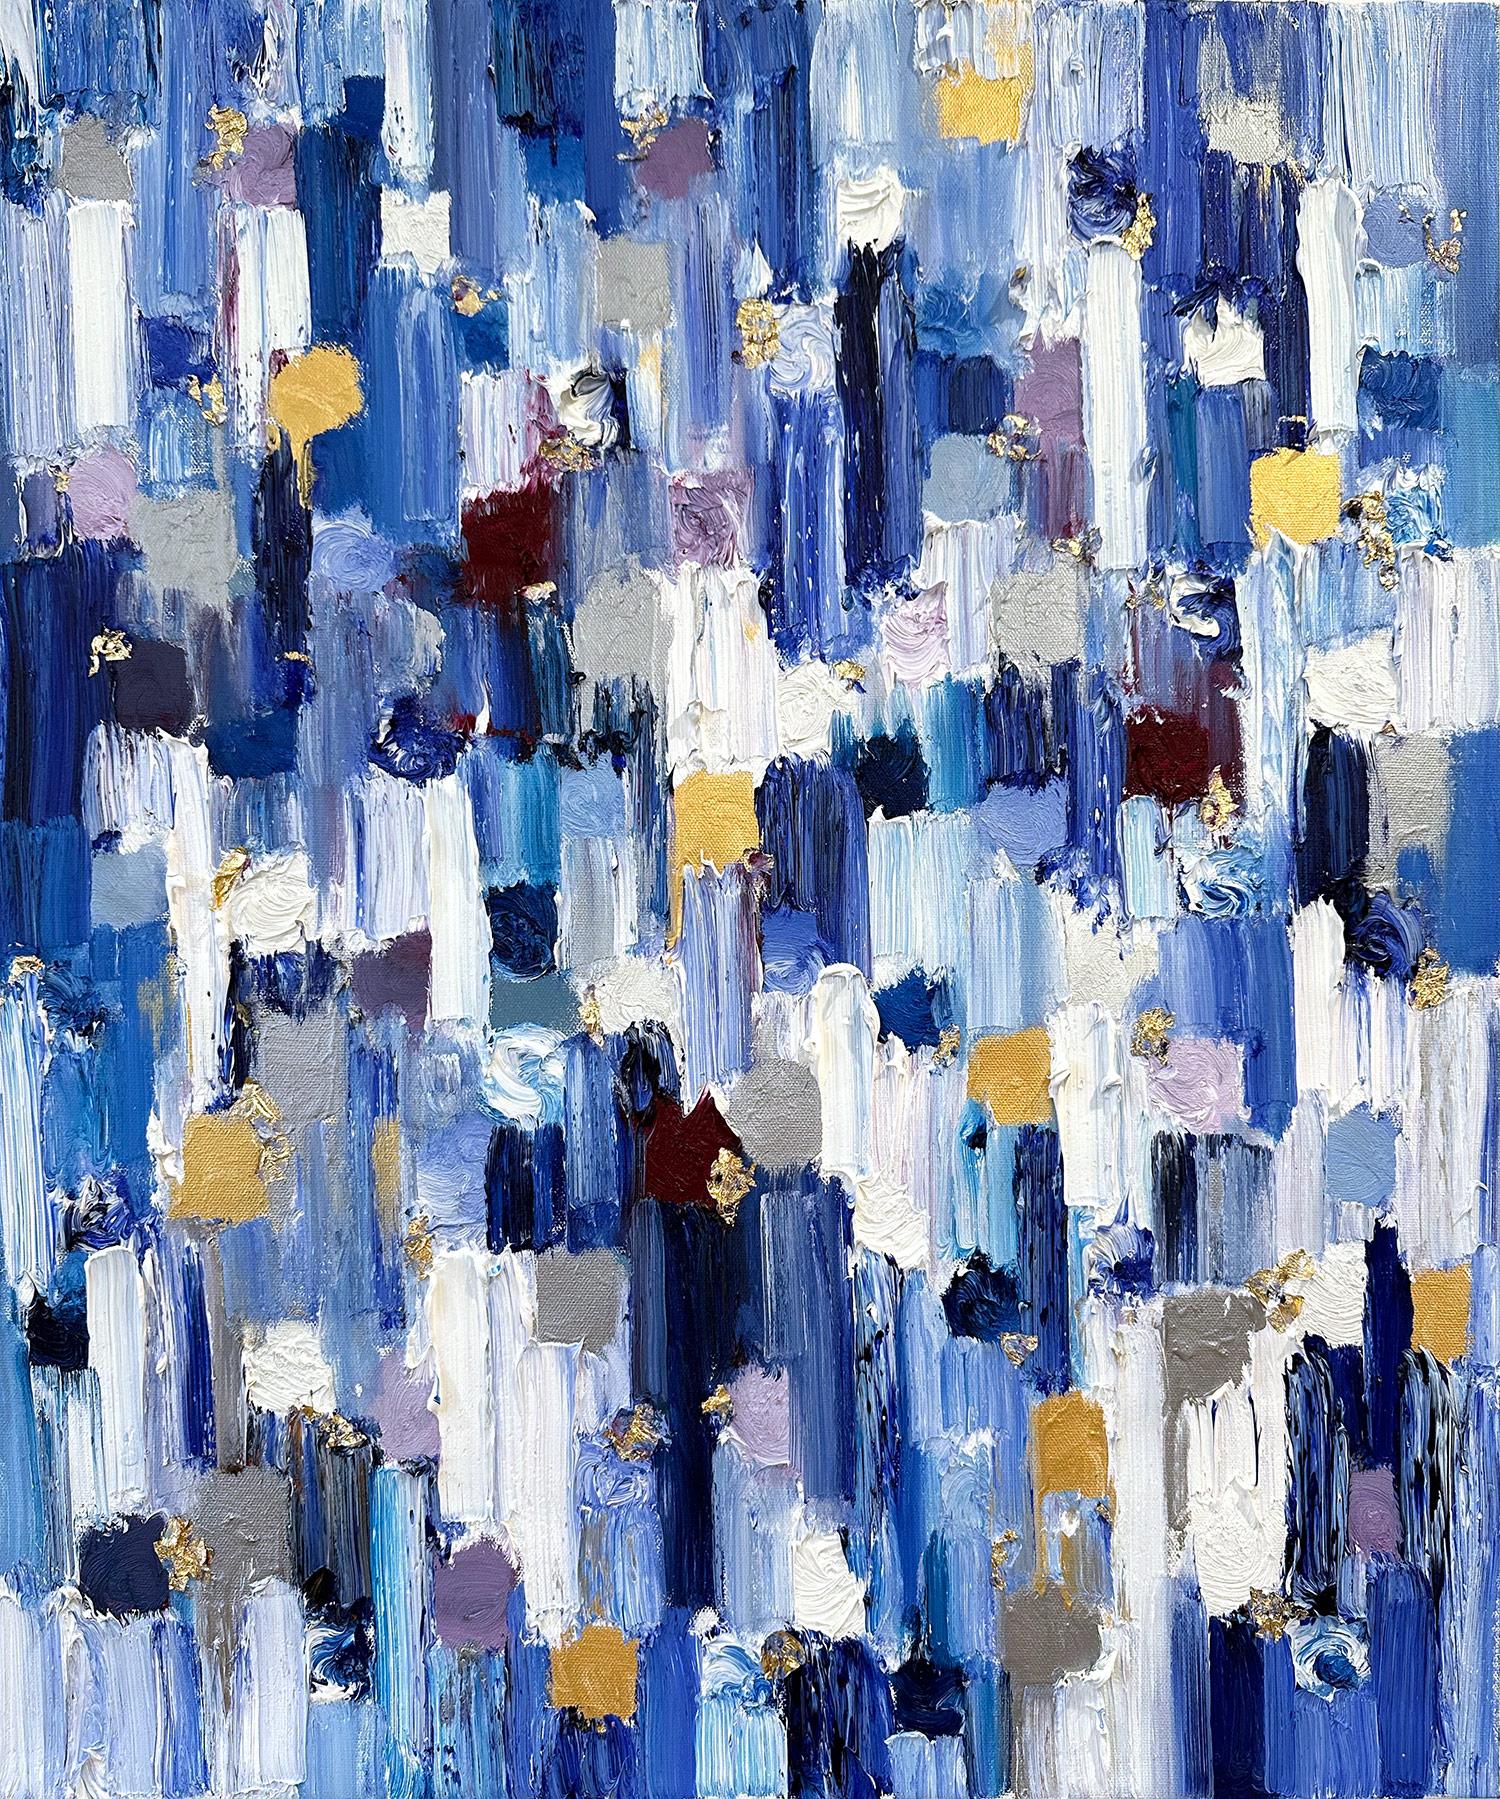 Abstract Painting Cindy Shaoul - "Dripping Dot - Paris at Night" Peinture à l'huile contemporaine multicolore sur toile